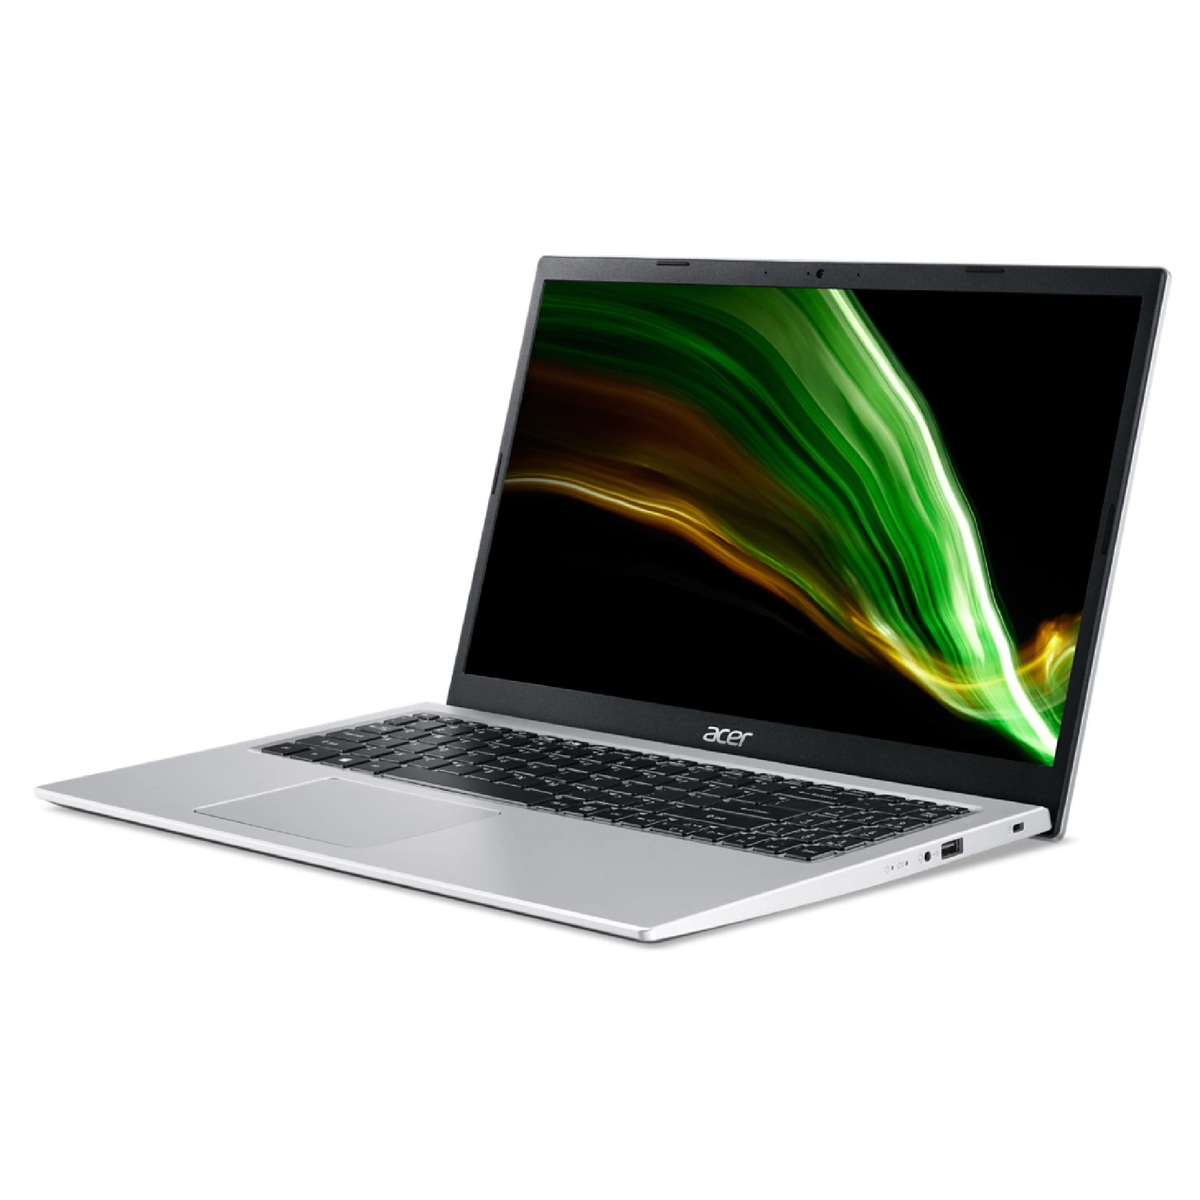 Acer Aspire 3,A315-58-38Y8 Notebook with 11th Gen Intel Corei3-1115G4,4GB DDR4 RAM,256GB SSD Storage,15.6" FHD IPS Display,Windows 11, Silver